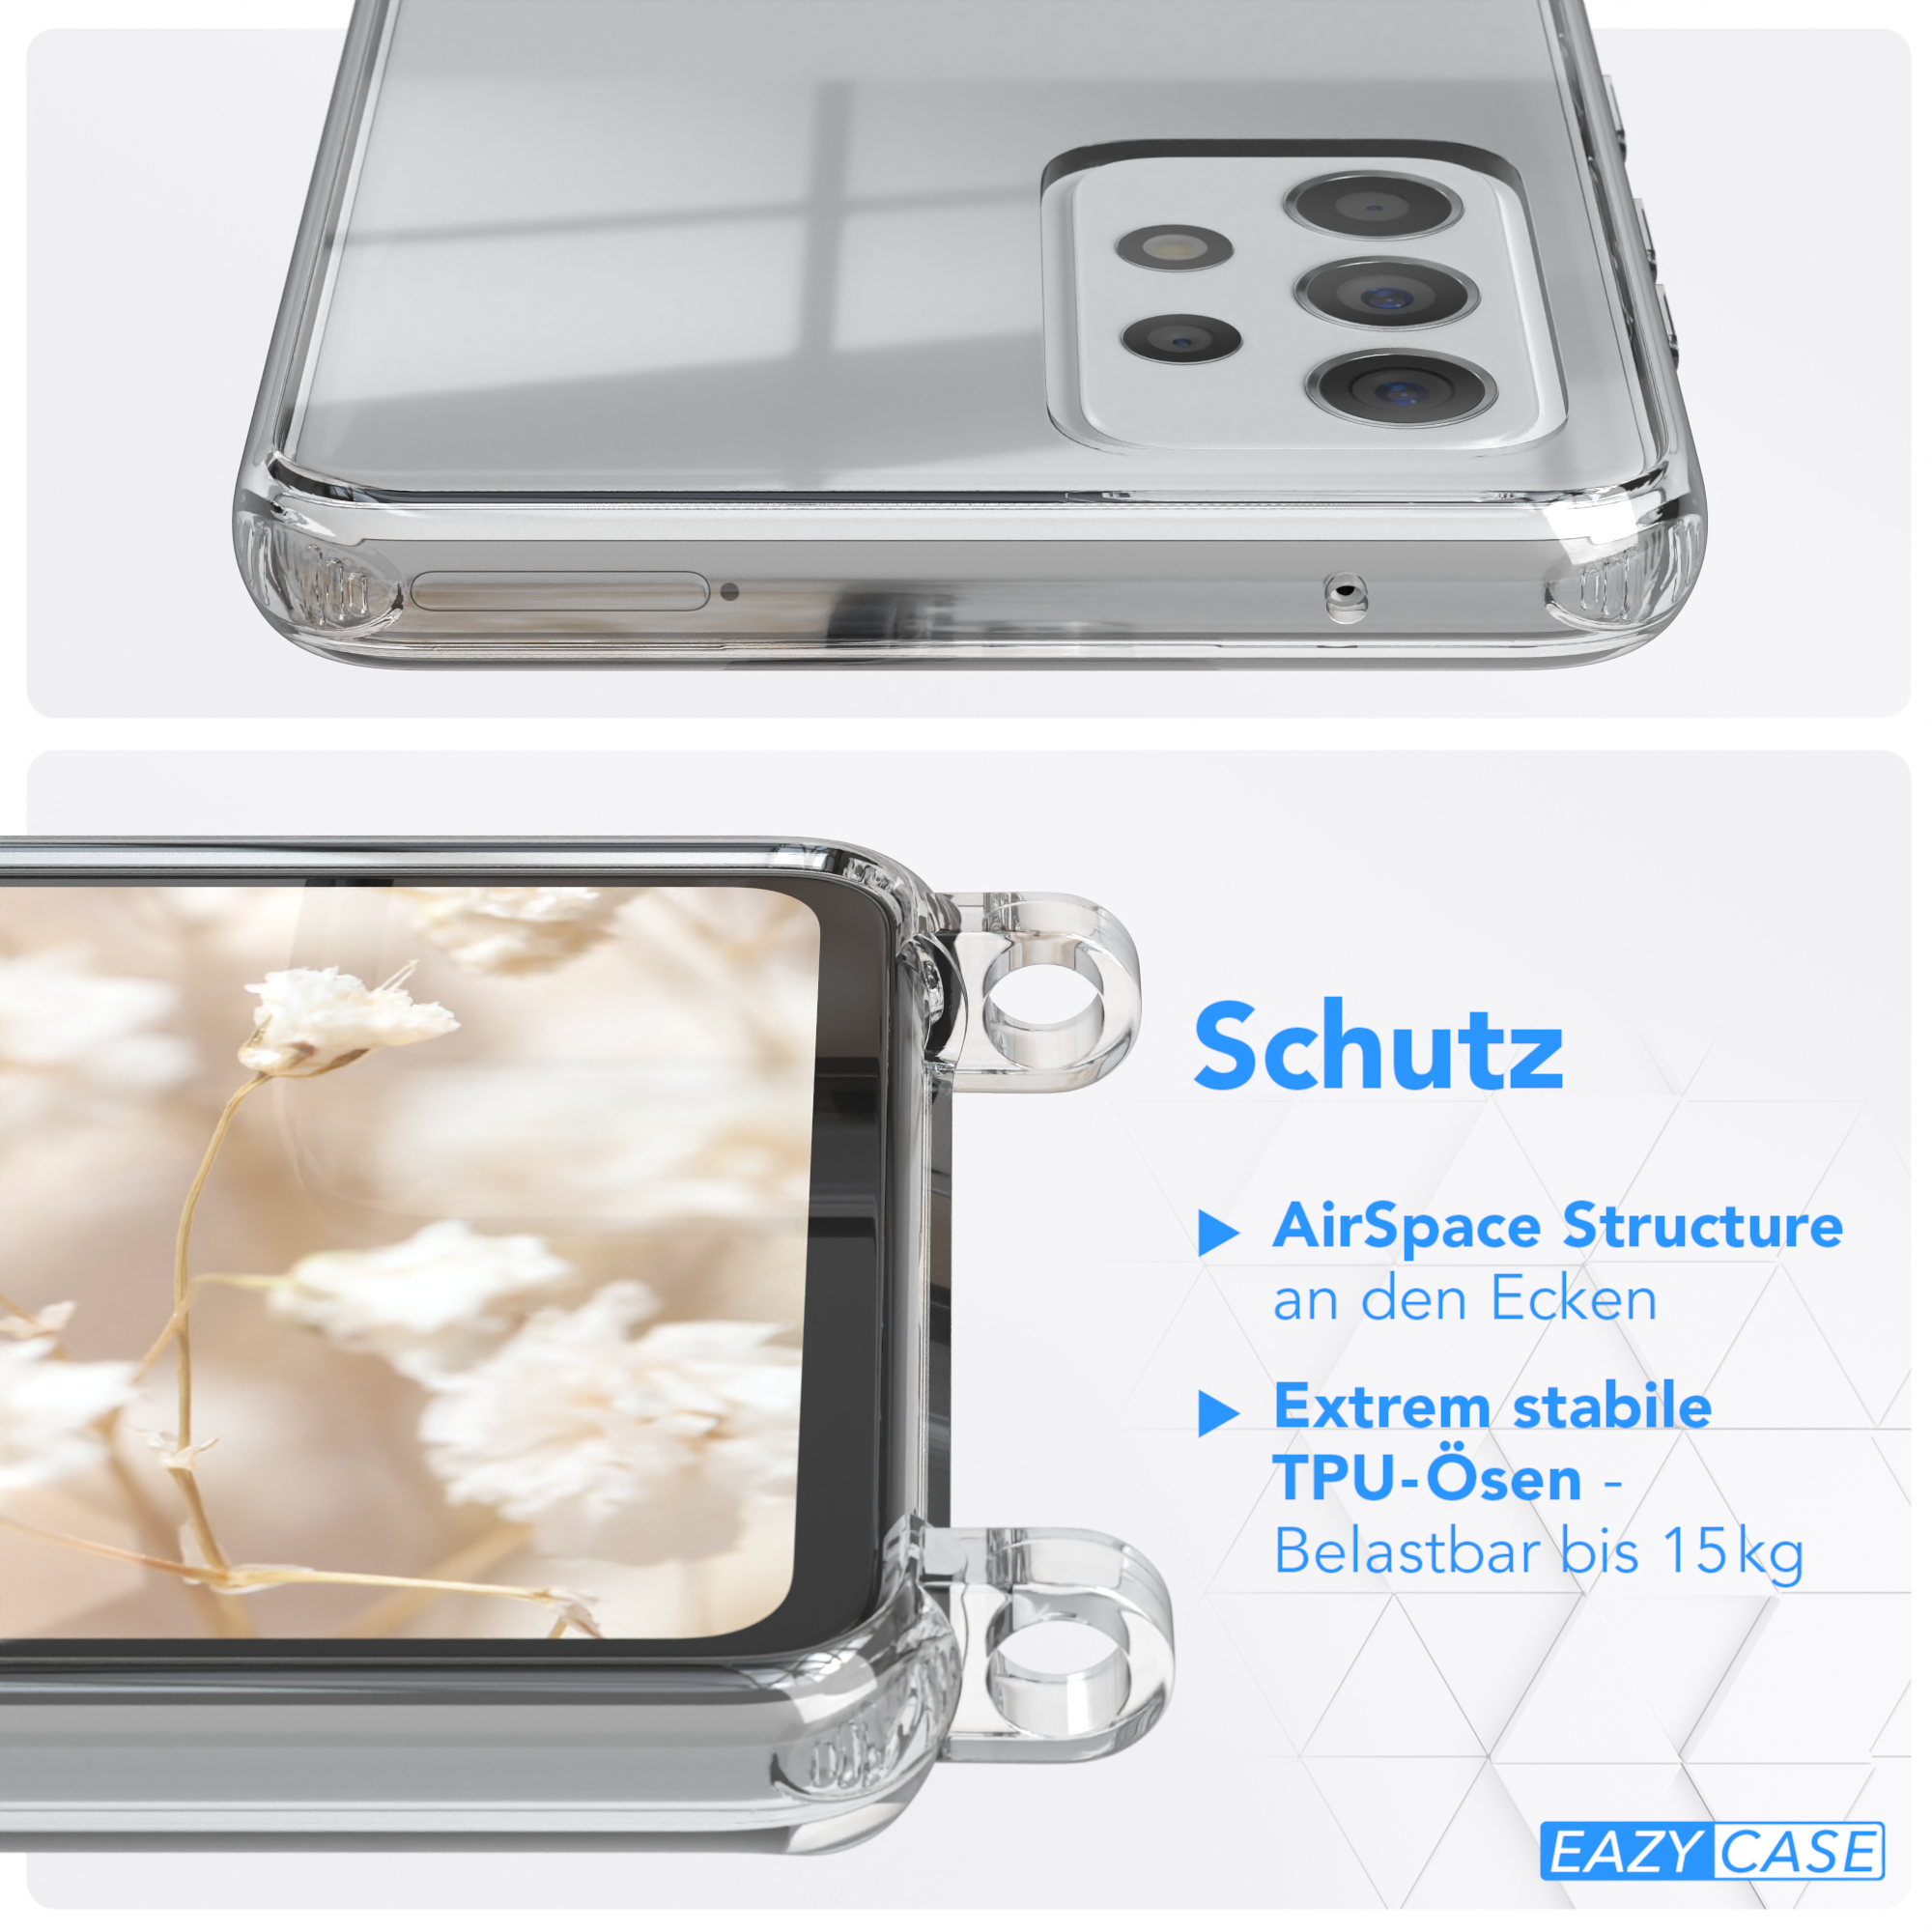 Umhängetasche, Galaxy 5G, A52 / mit Samsung, Transparente Handyhülle Kordel / CASE Style, A52s Mix A52 Braun 5G Boho EAZY